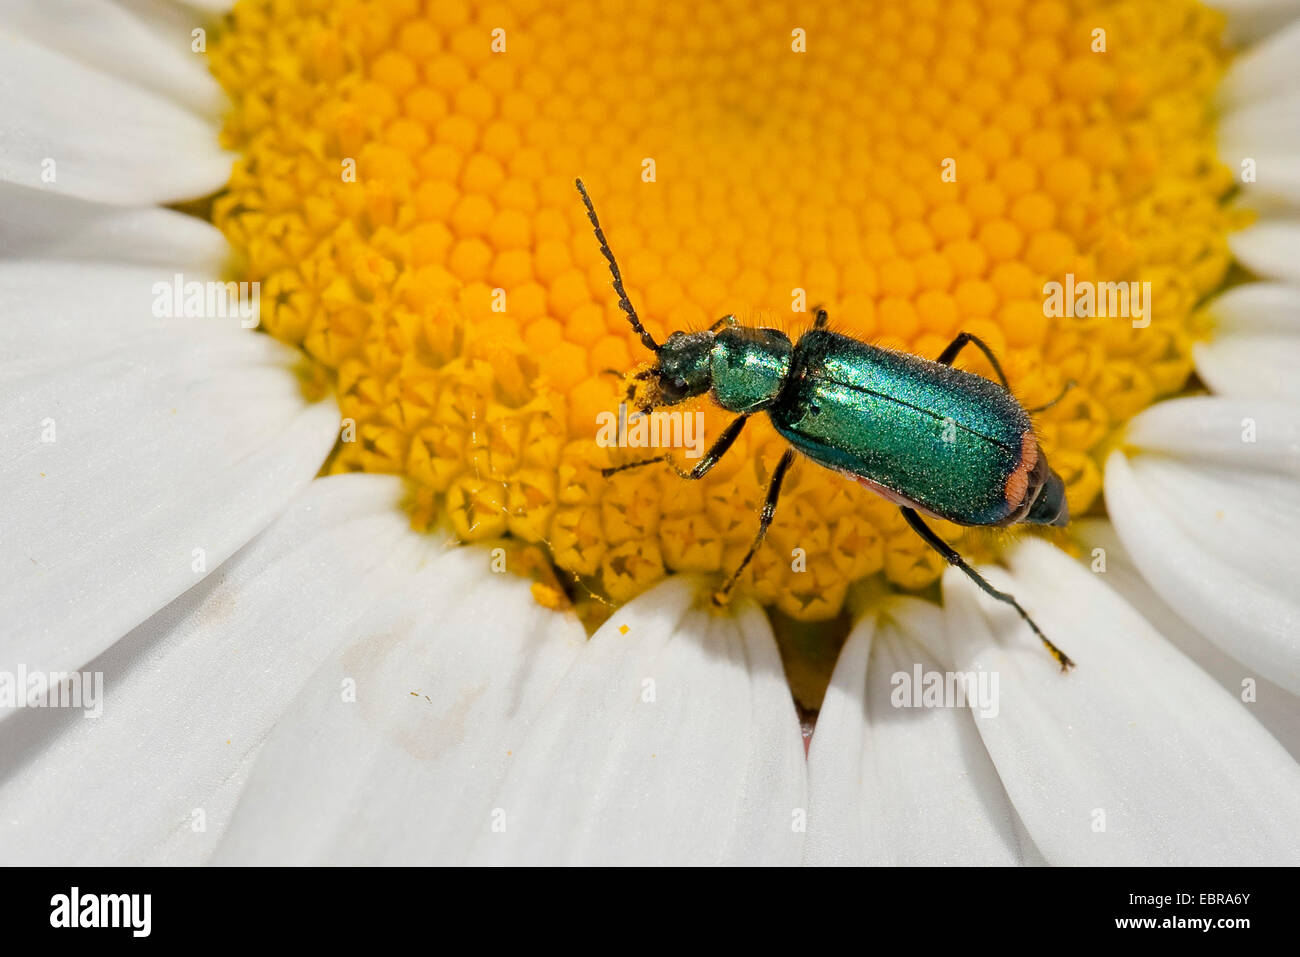 malachiid beetle, flower beetle (Cordylepherus viridis, Malachius viridis), on a daisy blossom, Germany Stock Photo